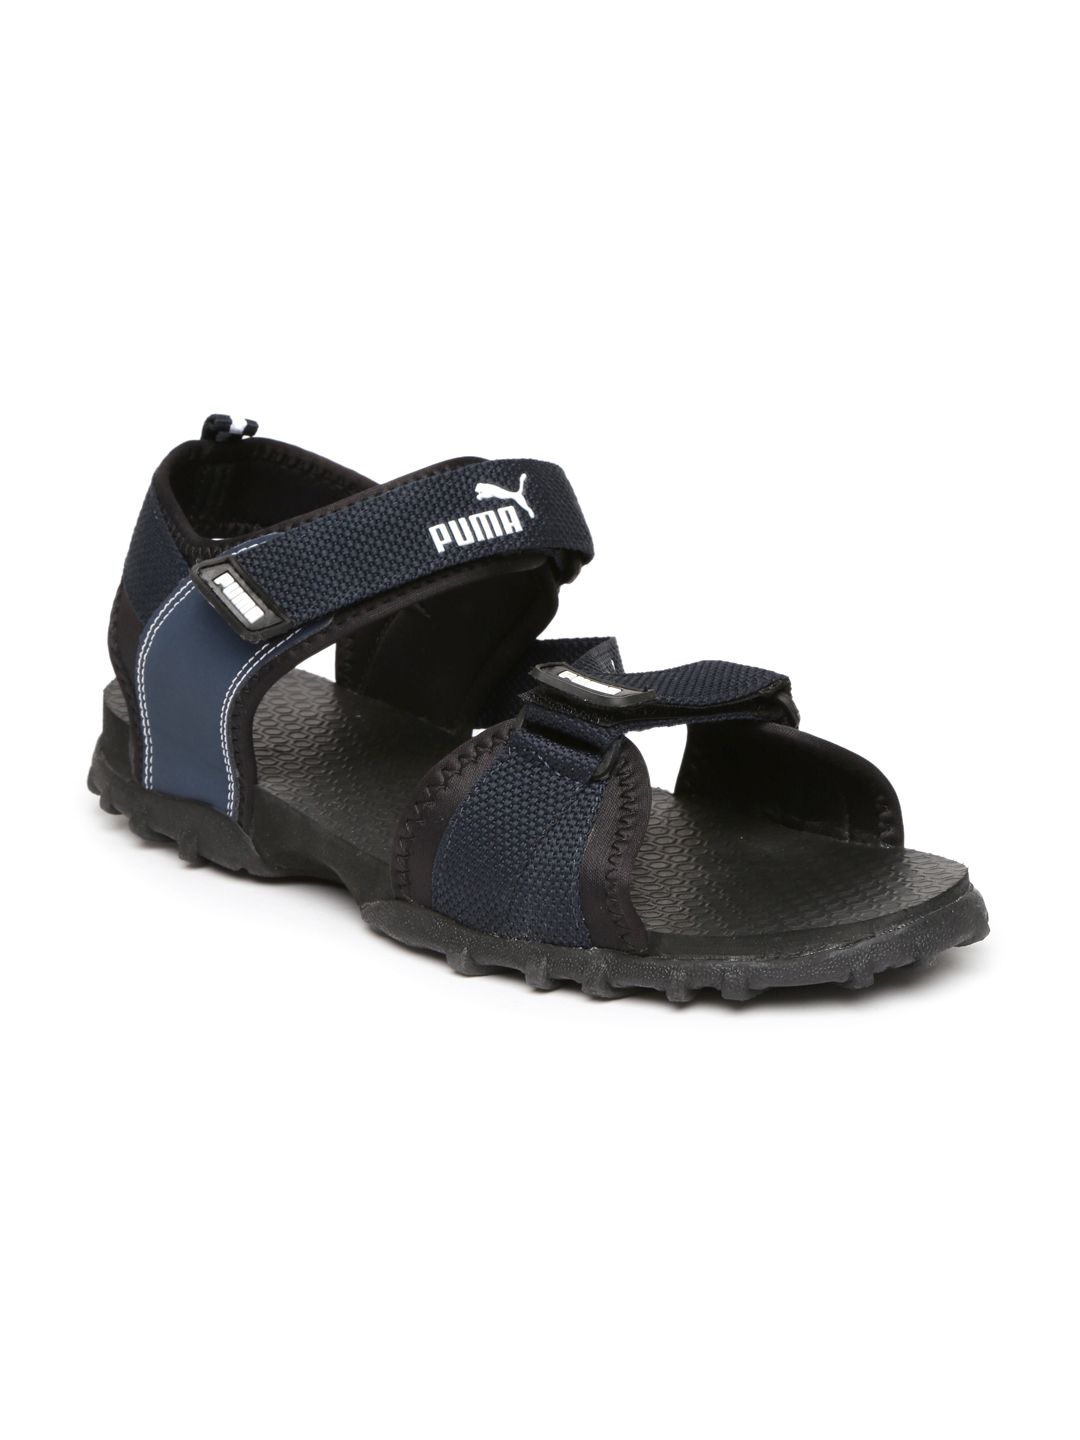 puma mens sandals Sale,up to 32% Discounts